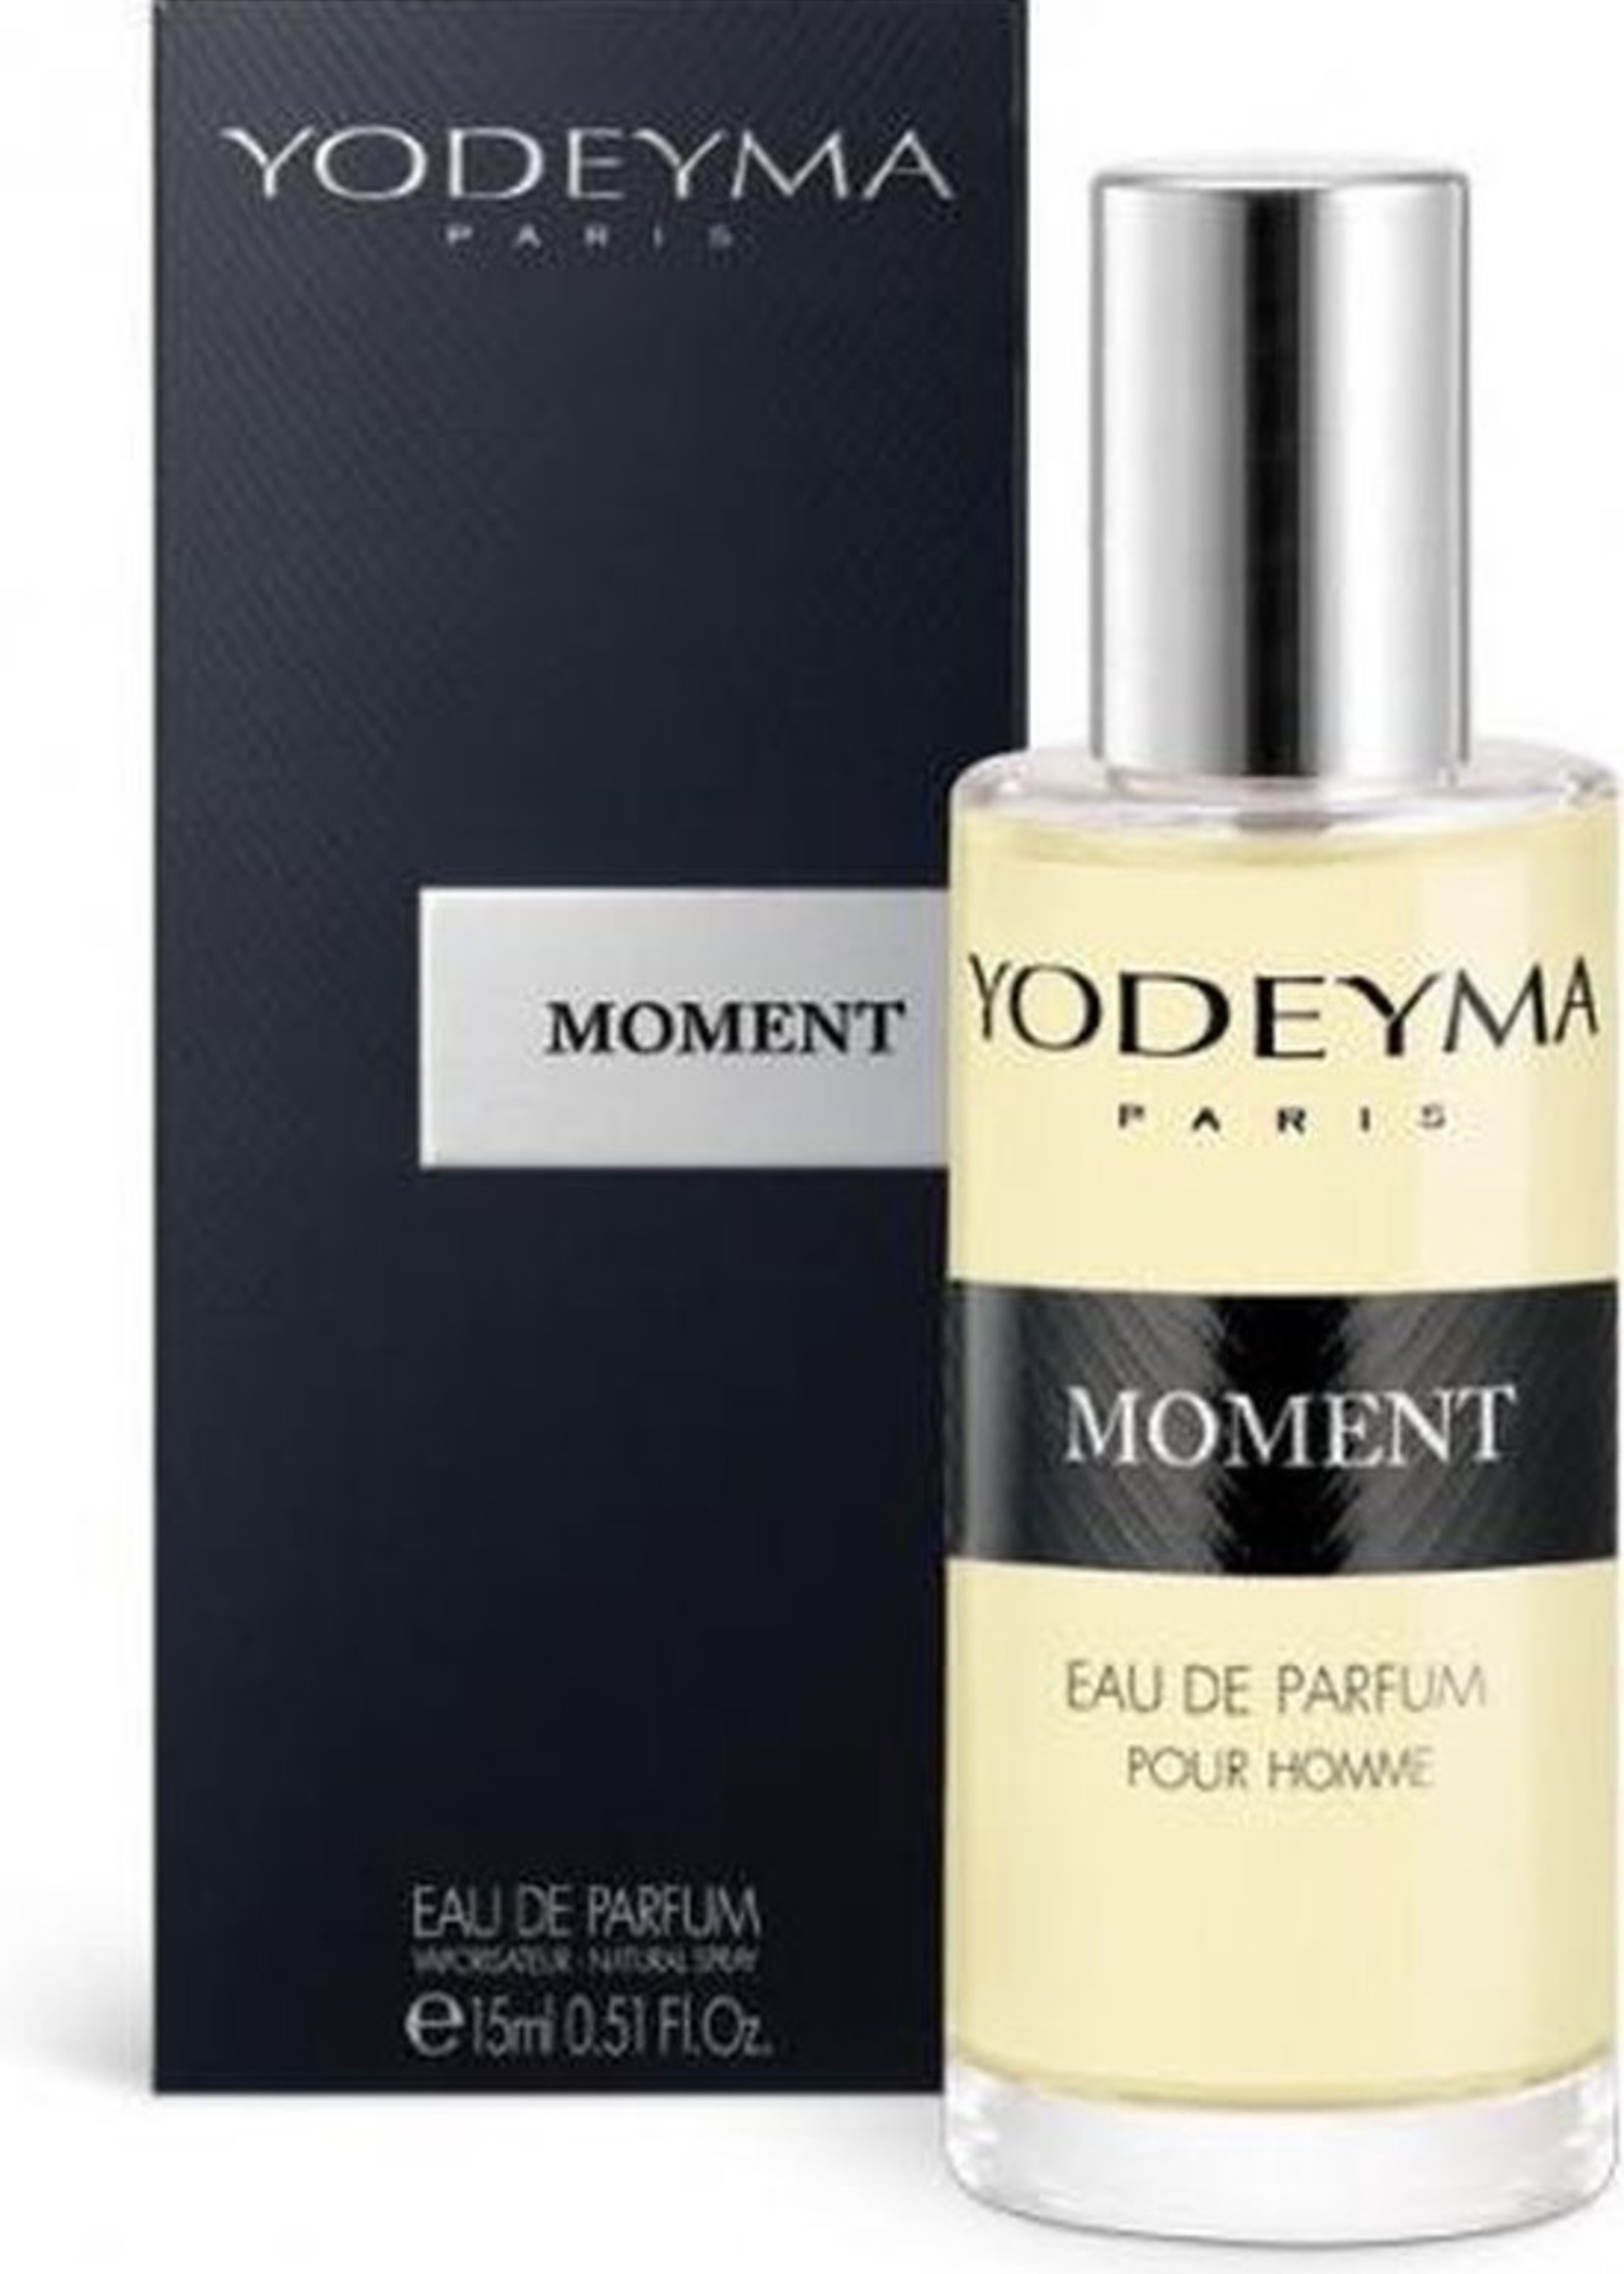 Yodeyma Parfums (Tester) MOMENT Eau de Parfum 15 ml,